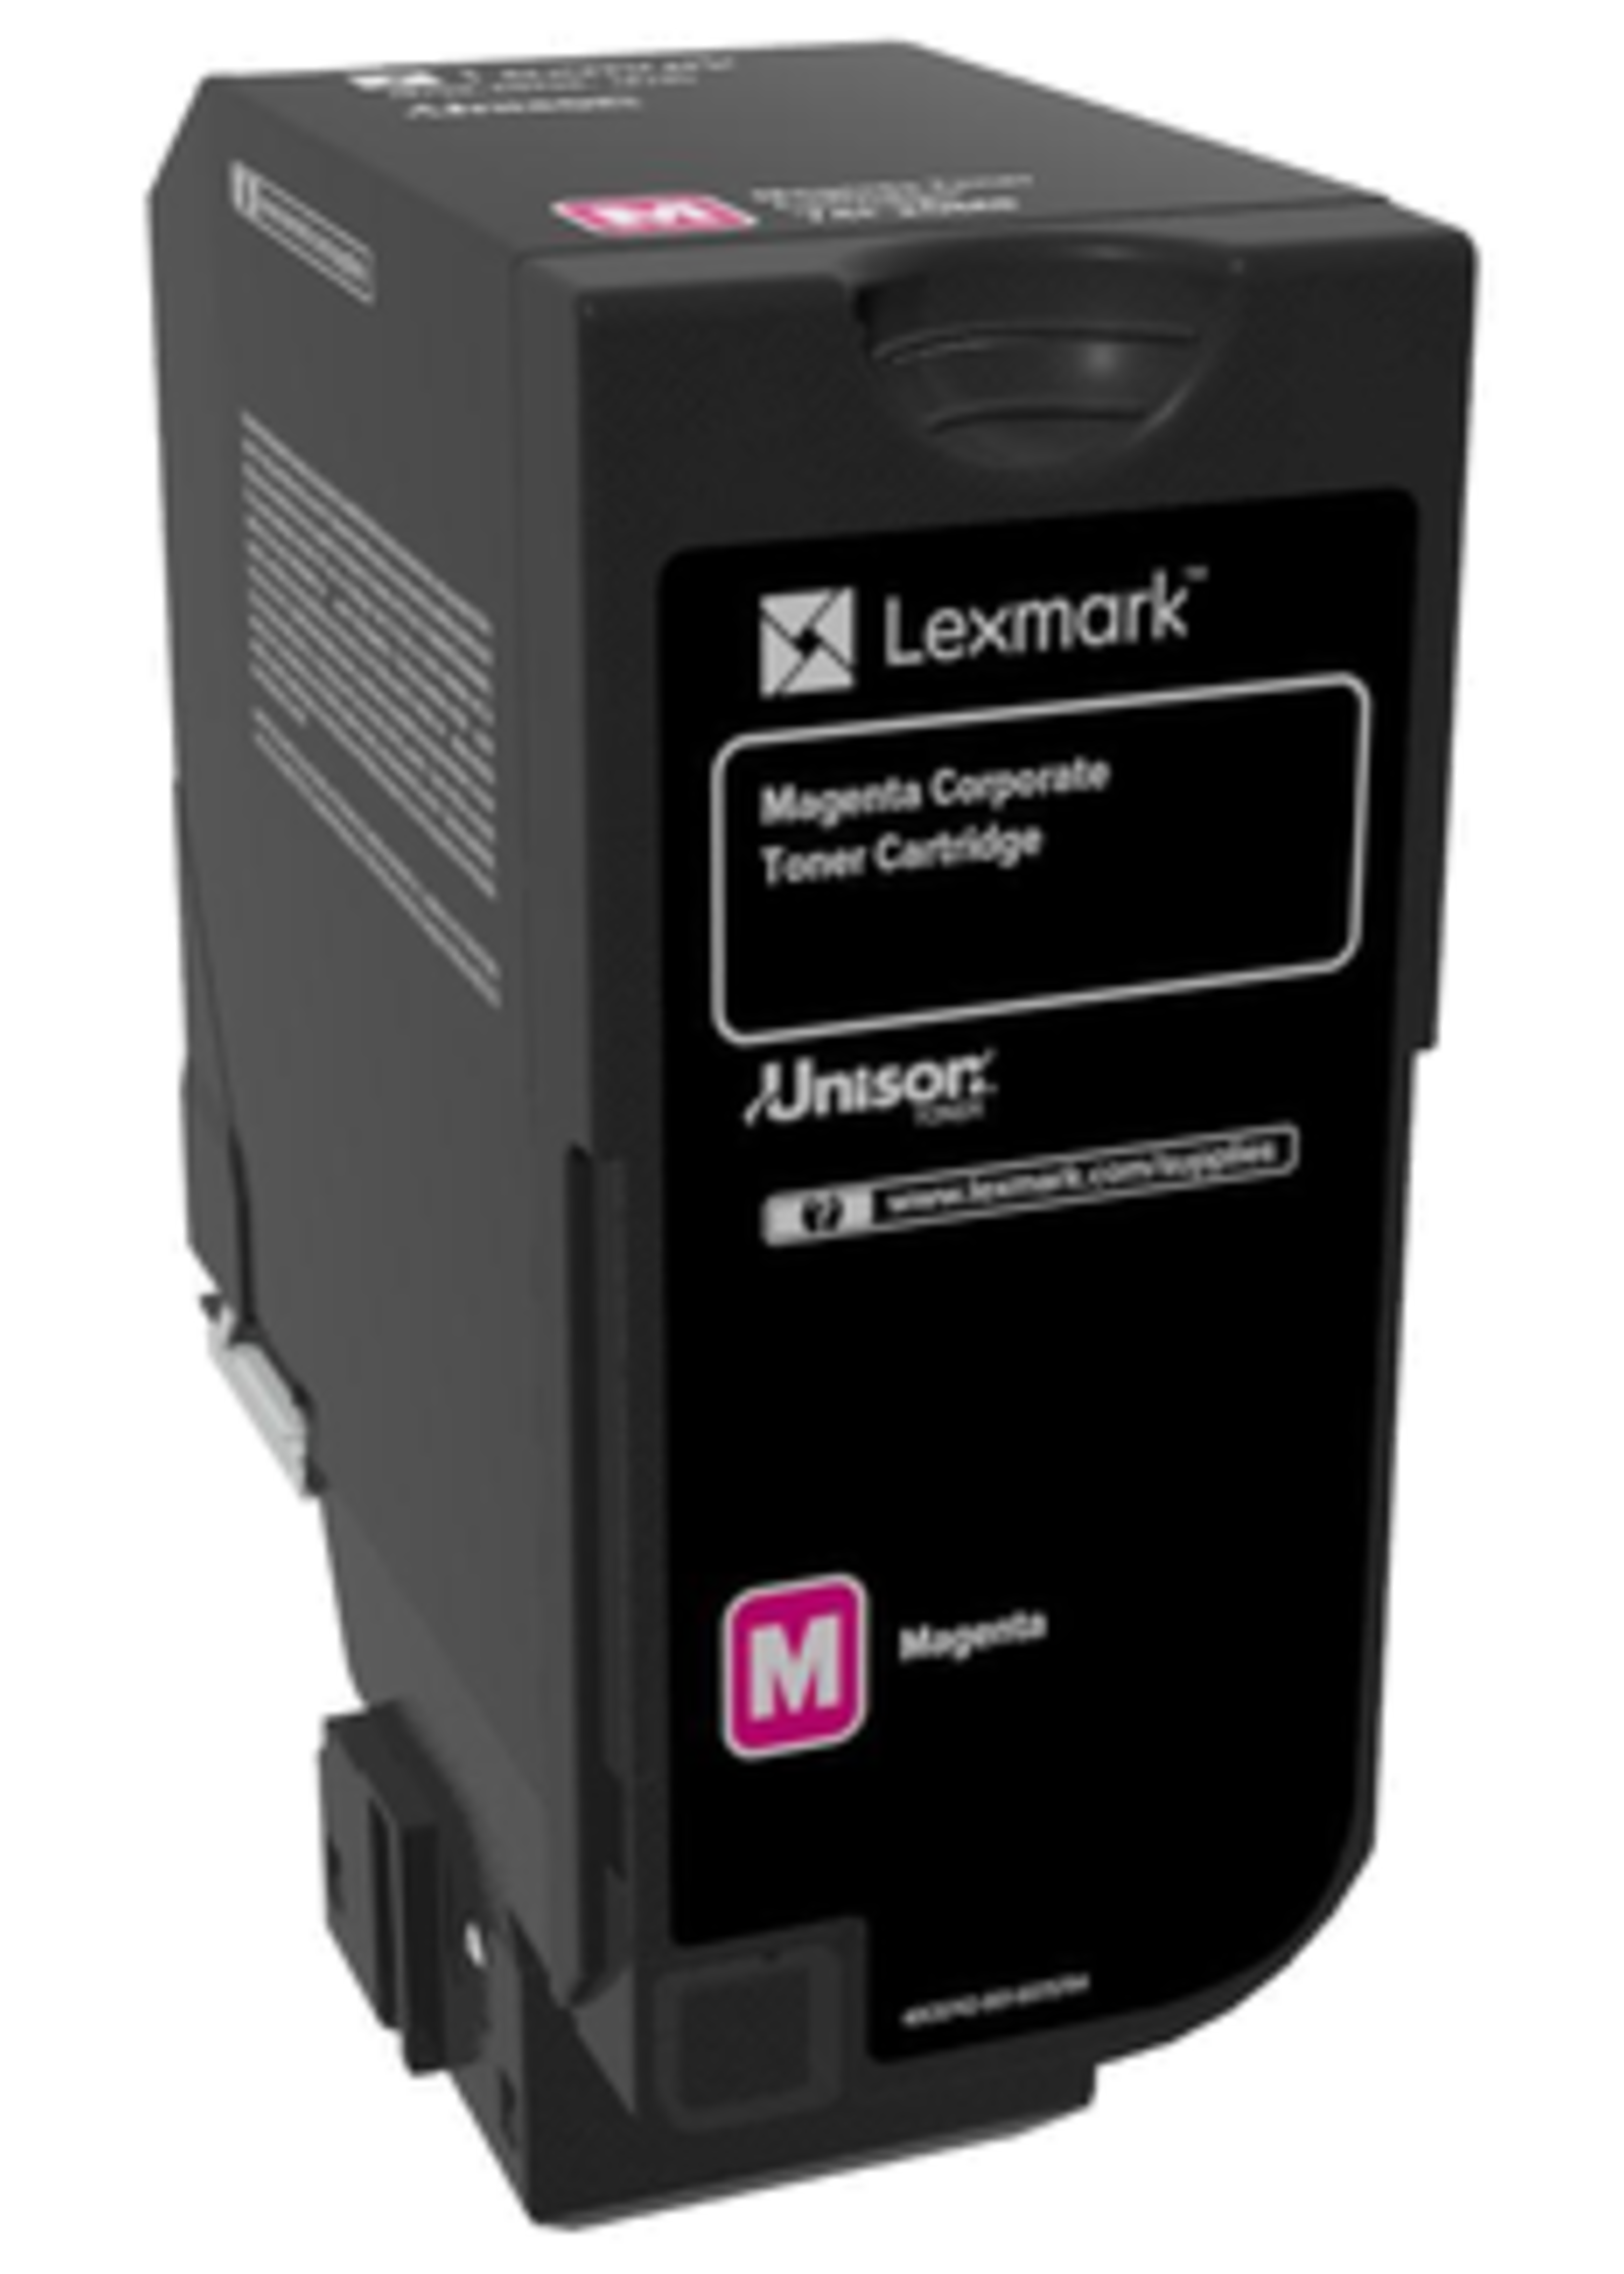 LEXMARK 3K Magenta Corporate Toner Cartridge (CS